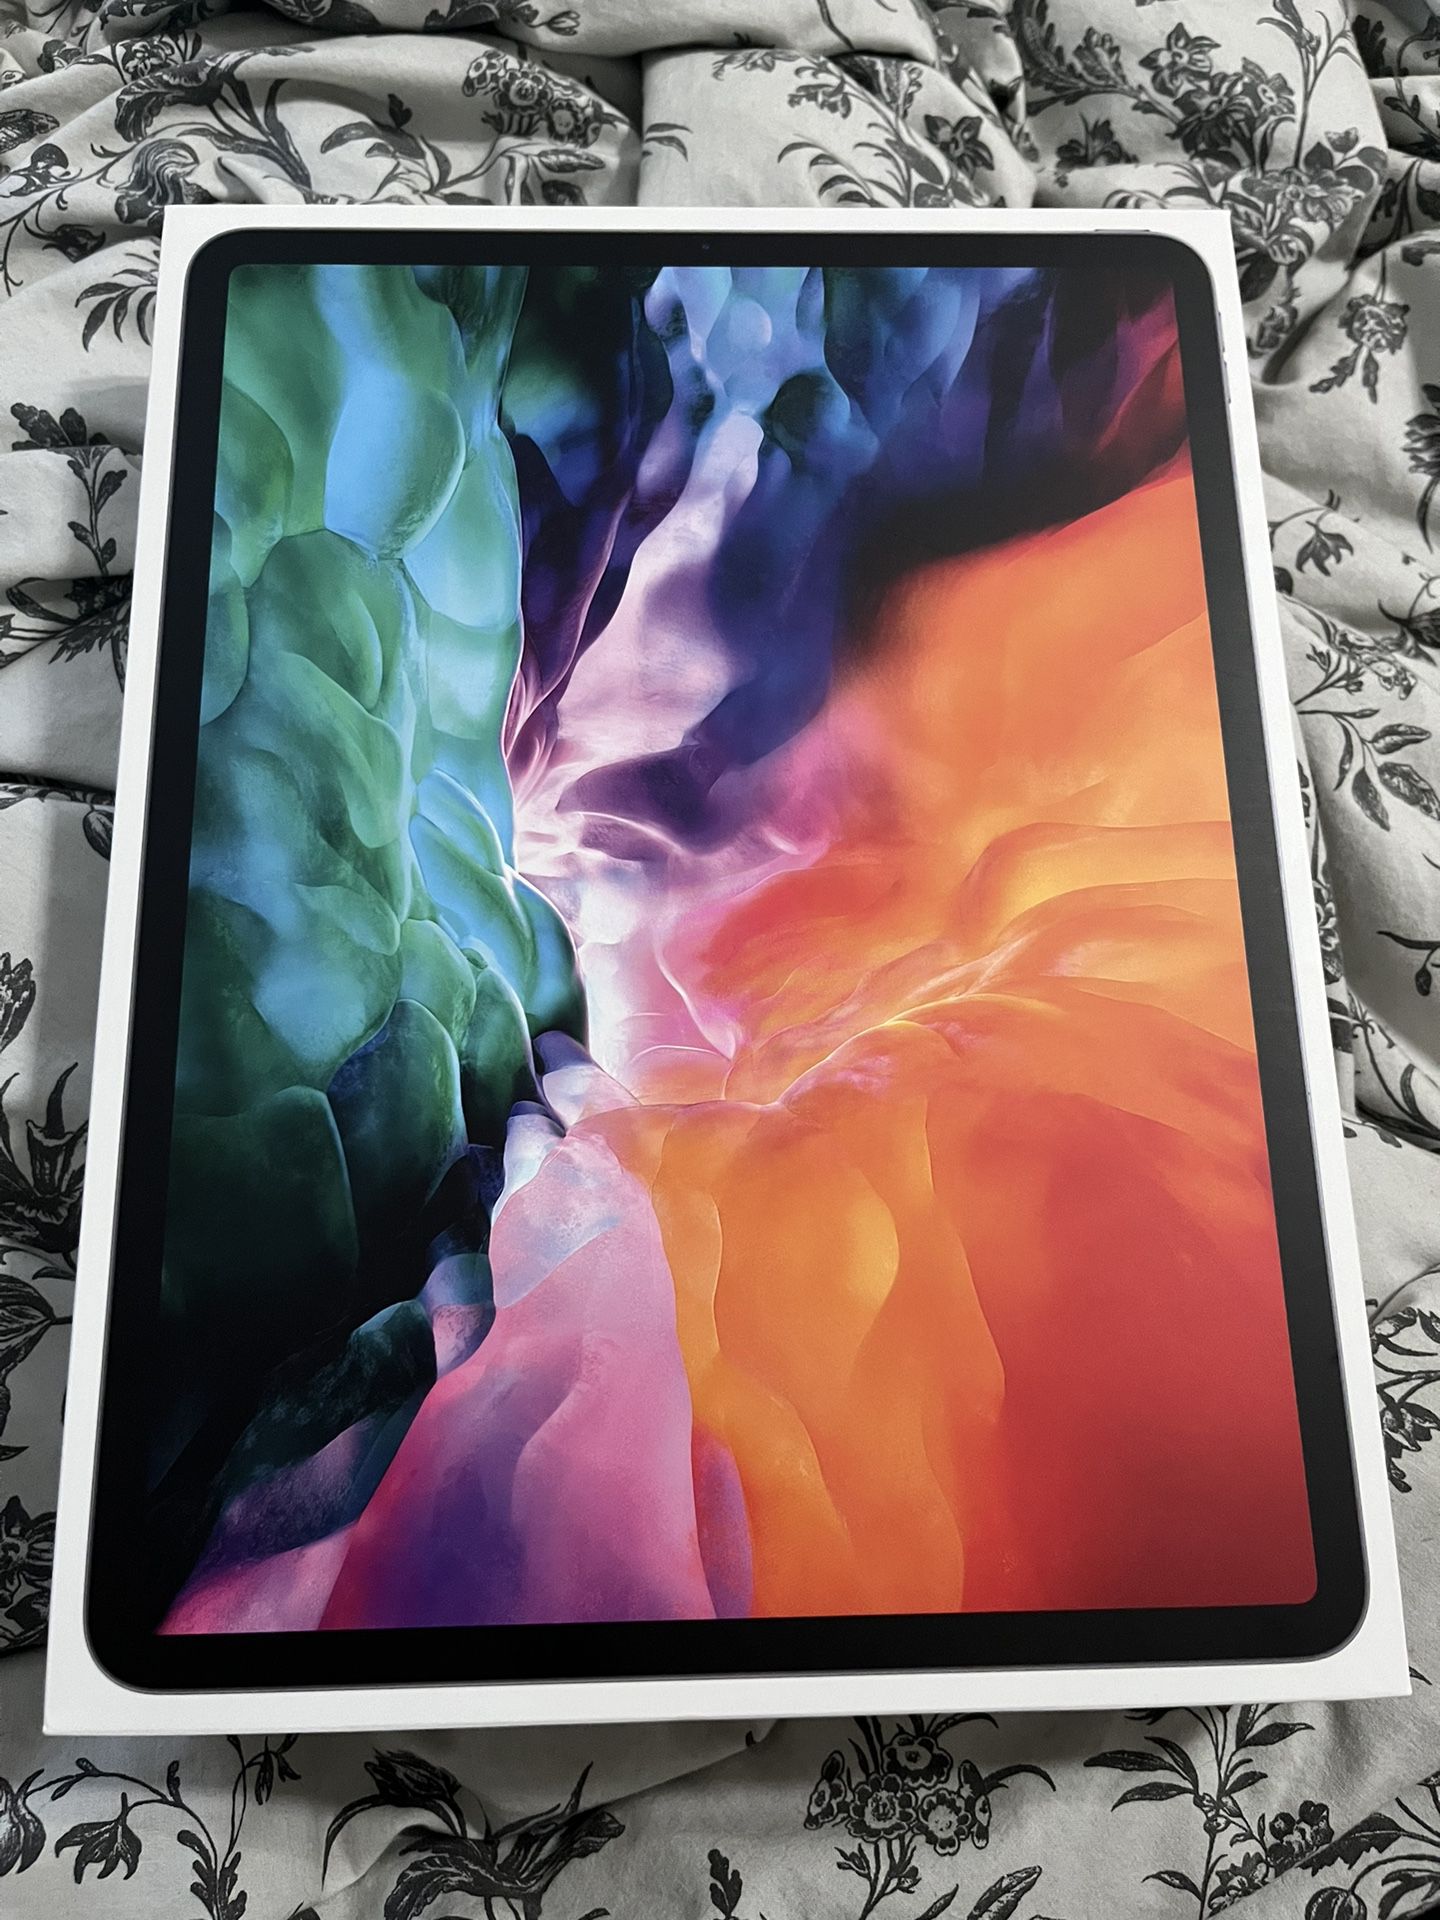 iPad Pro 12.9in (4th Generation) 